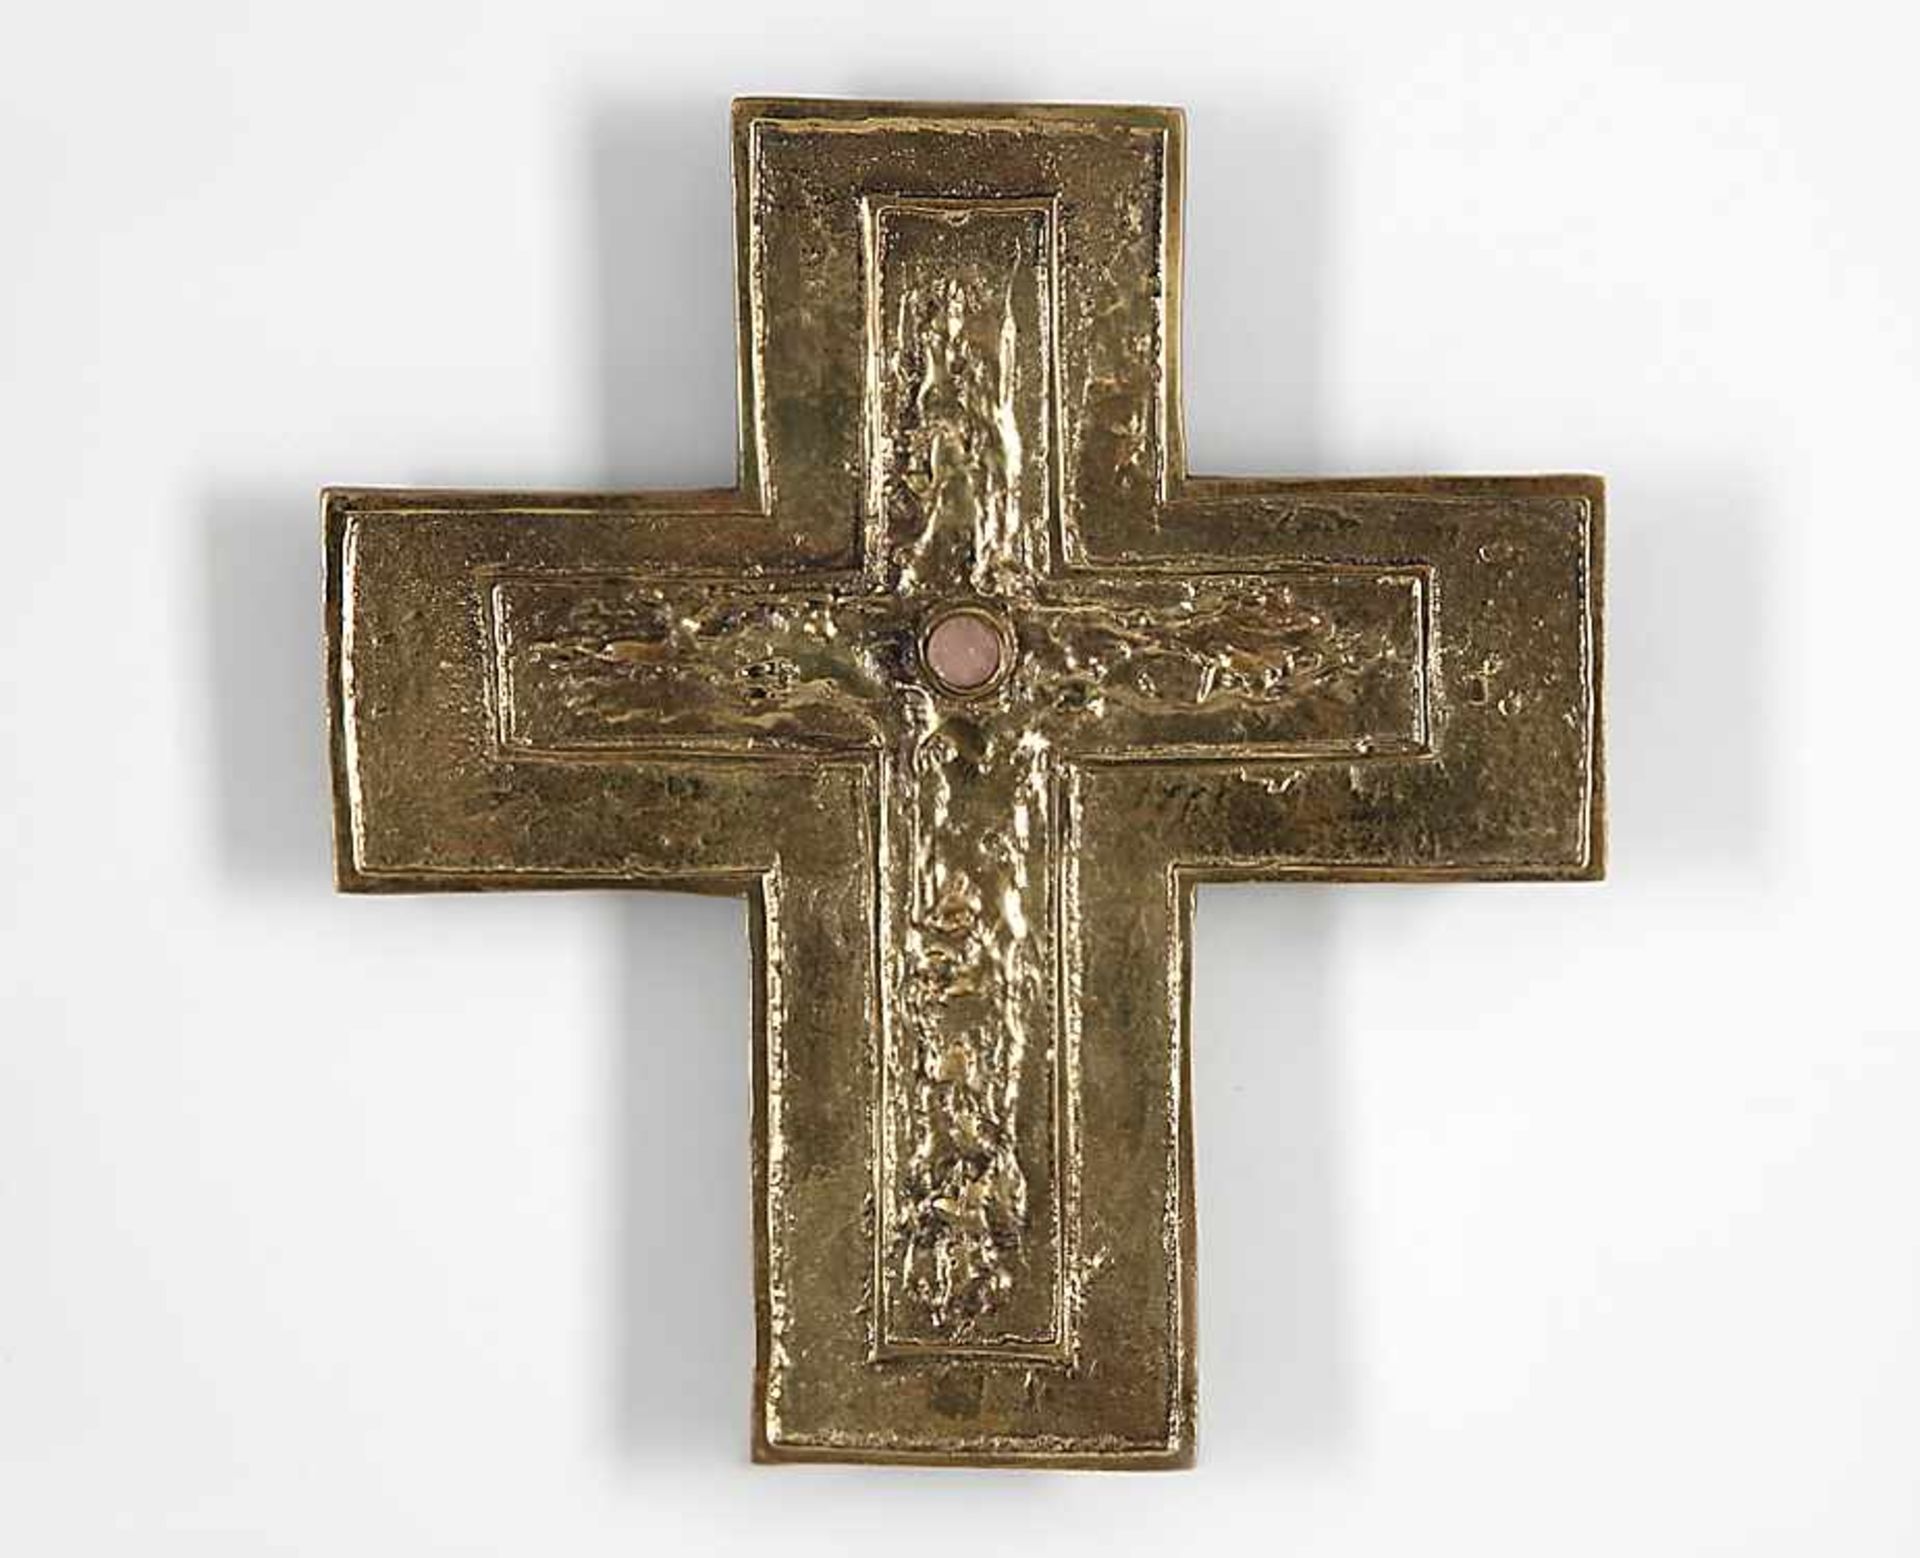 KruzifixMessing vergoldet, mittig Rosenquarz. H 30,3 cm, B 28,3 cm.€ 45